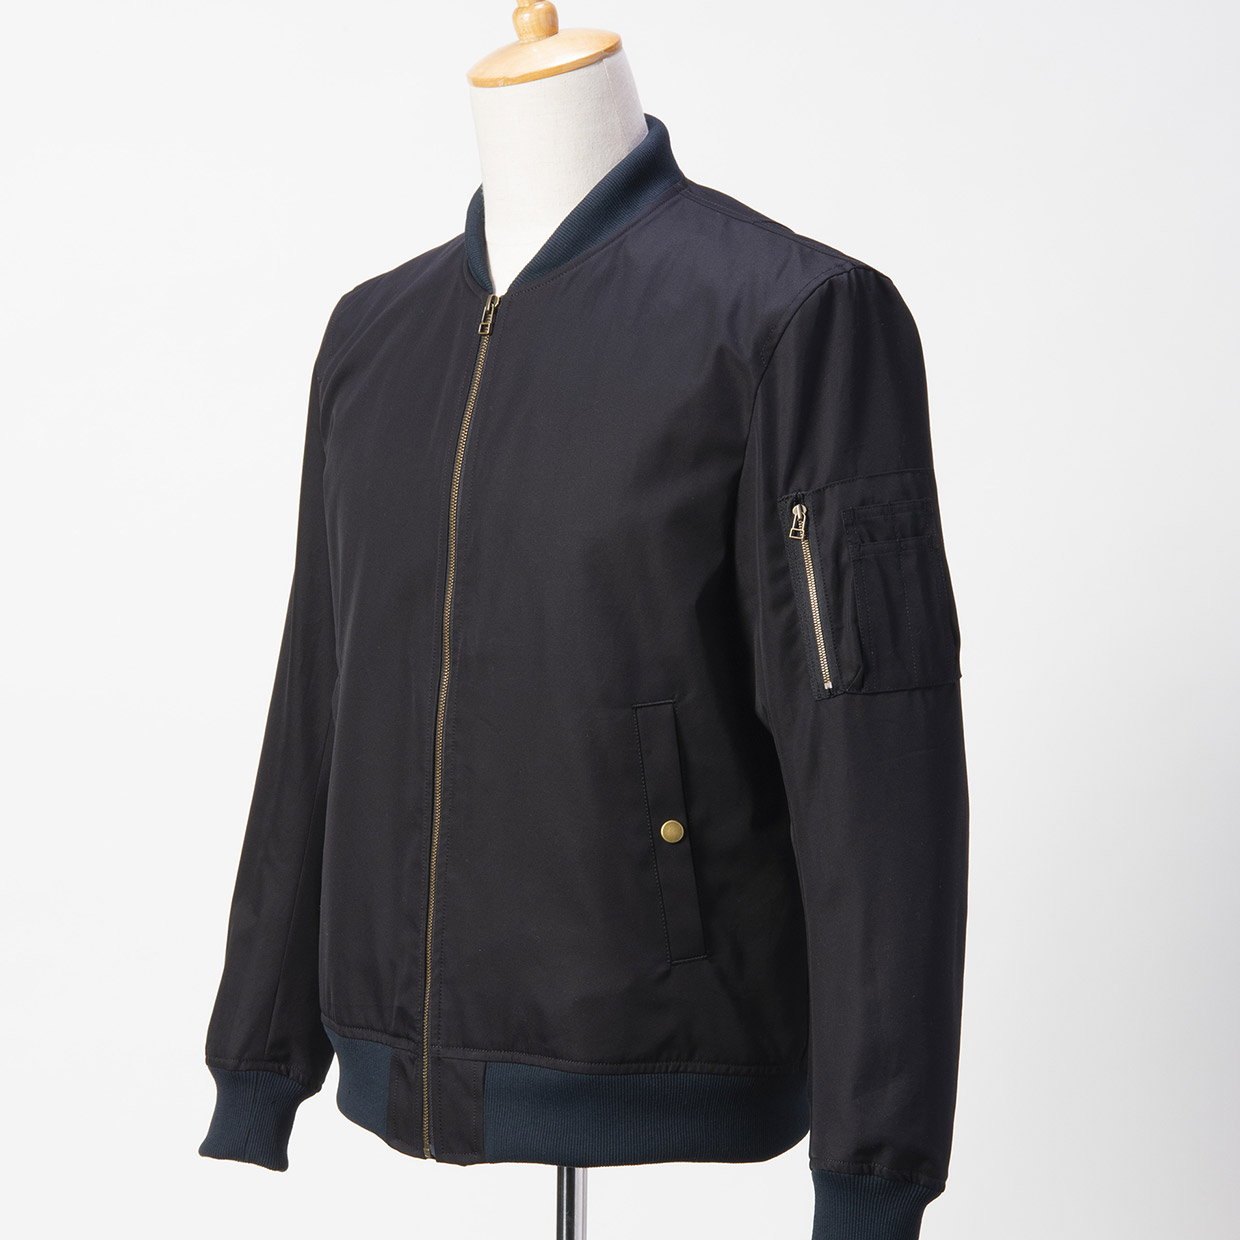 Unisex MA-1 jacket｜日本製上質コートのファクトリーブランド | styletex（スタイルテックス）